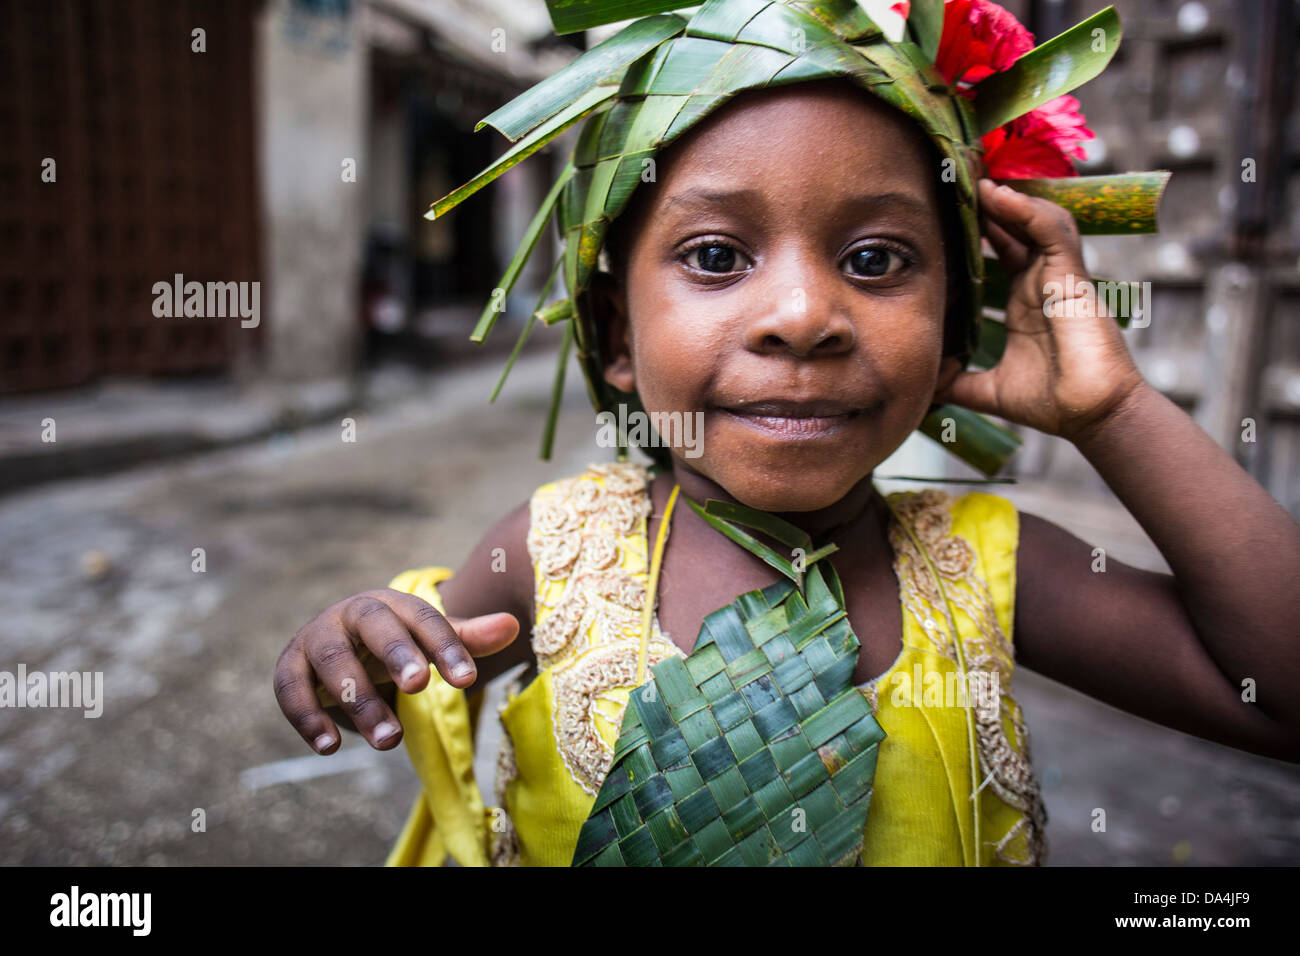 Children in Stone Town, Zanzibar - Tanzania Stock Photo